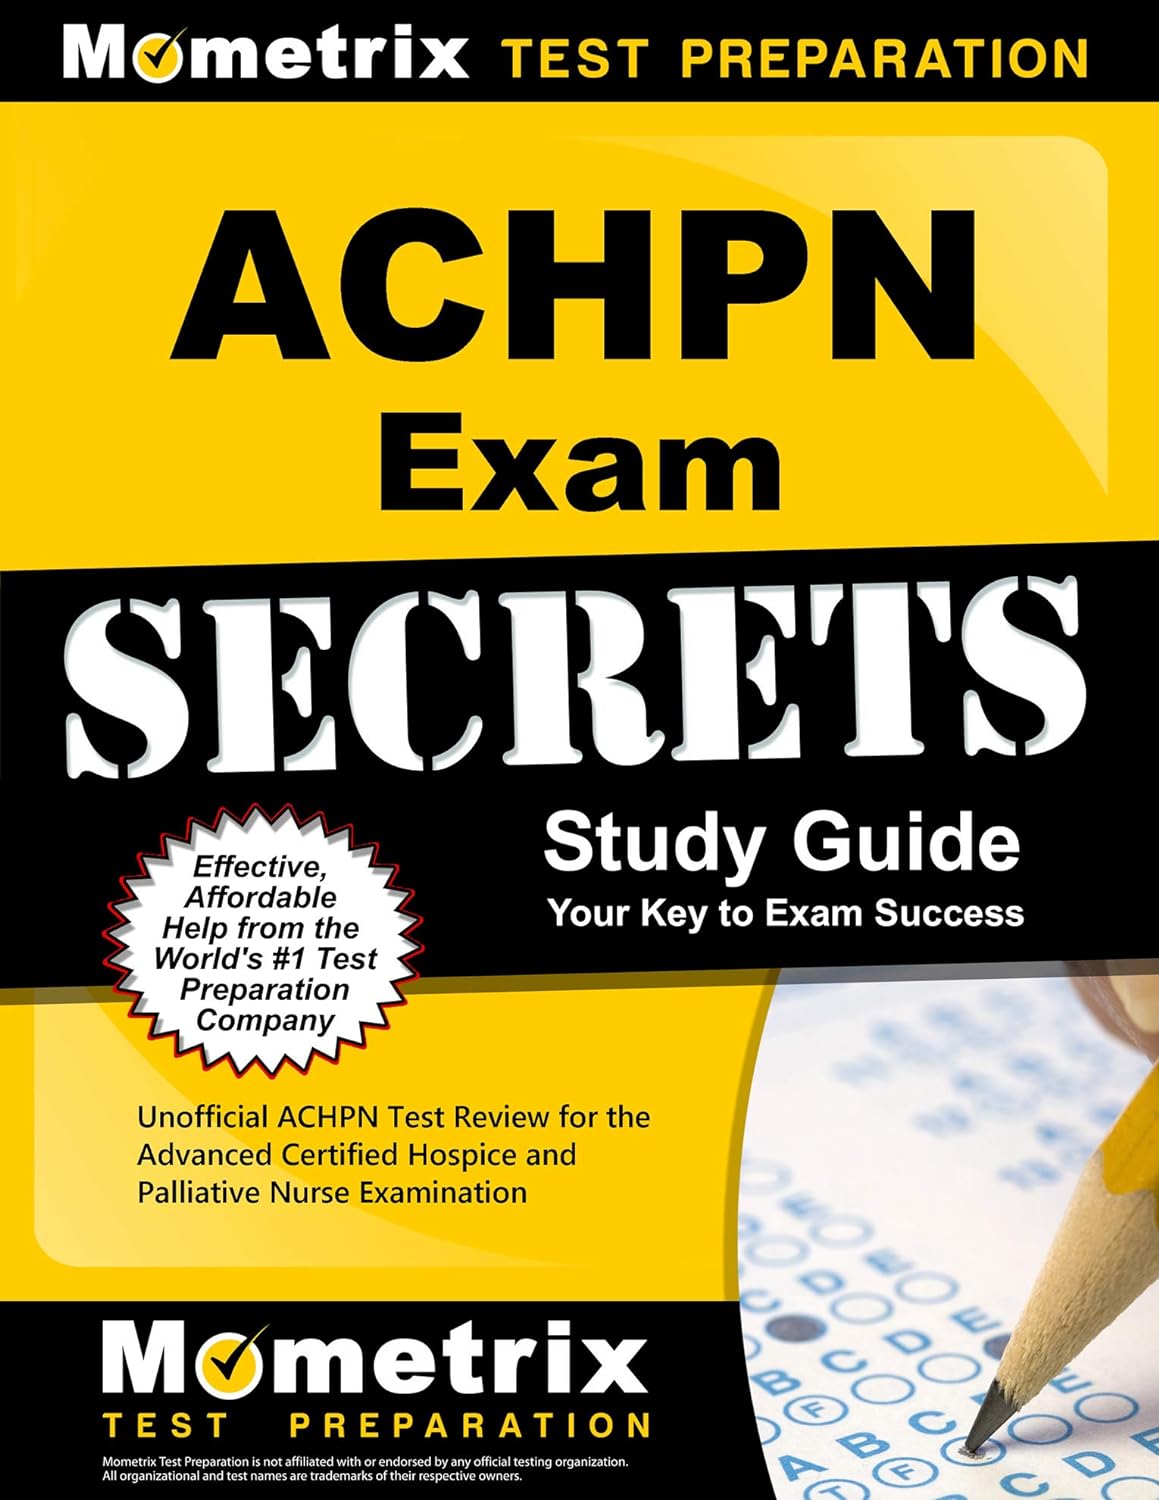 ACHPN Exam SECRET Study Guide by Mometrix